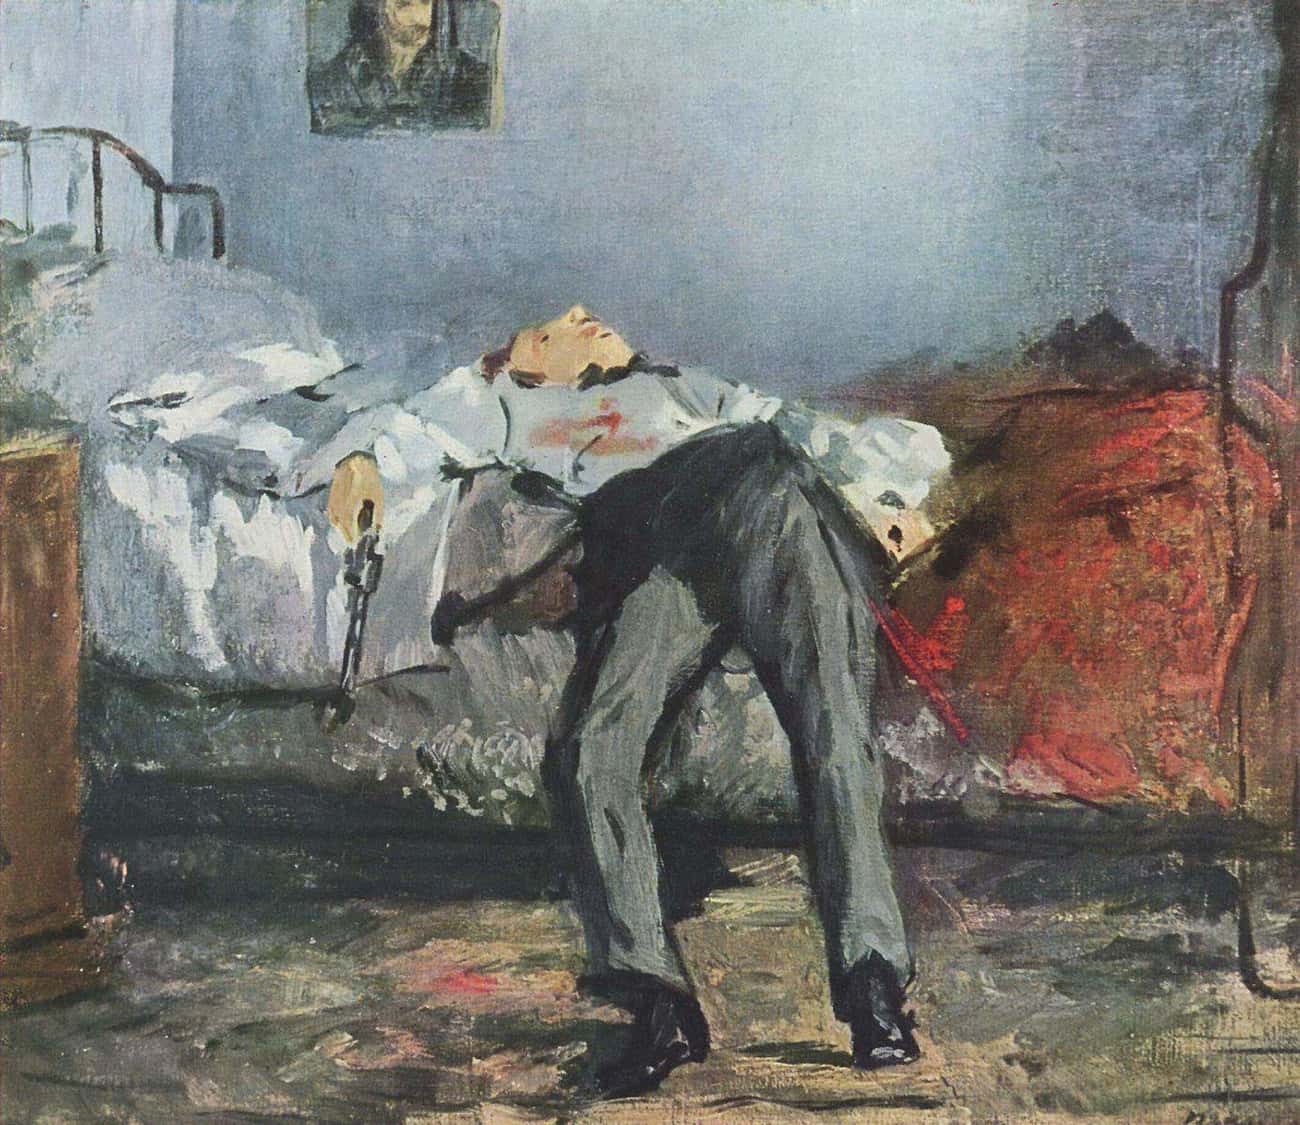 'The Suicide' By Édouard Manet, 1877-1881